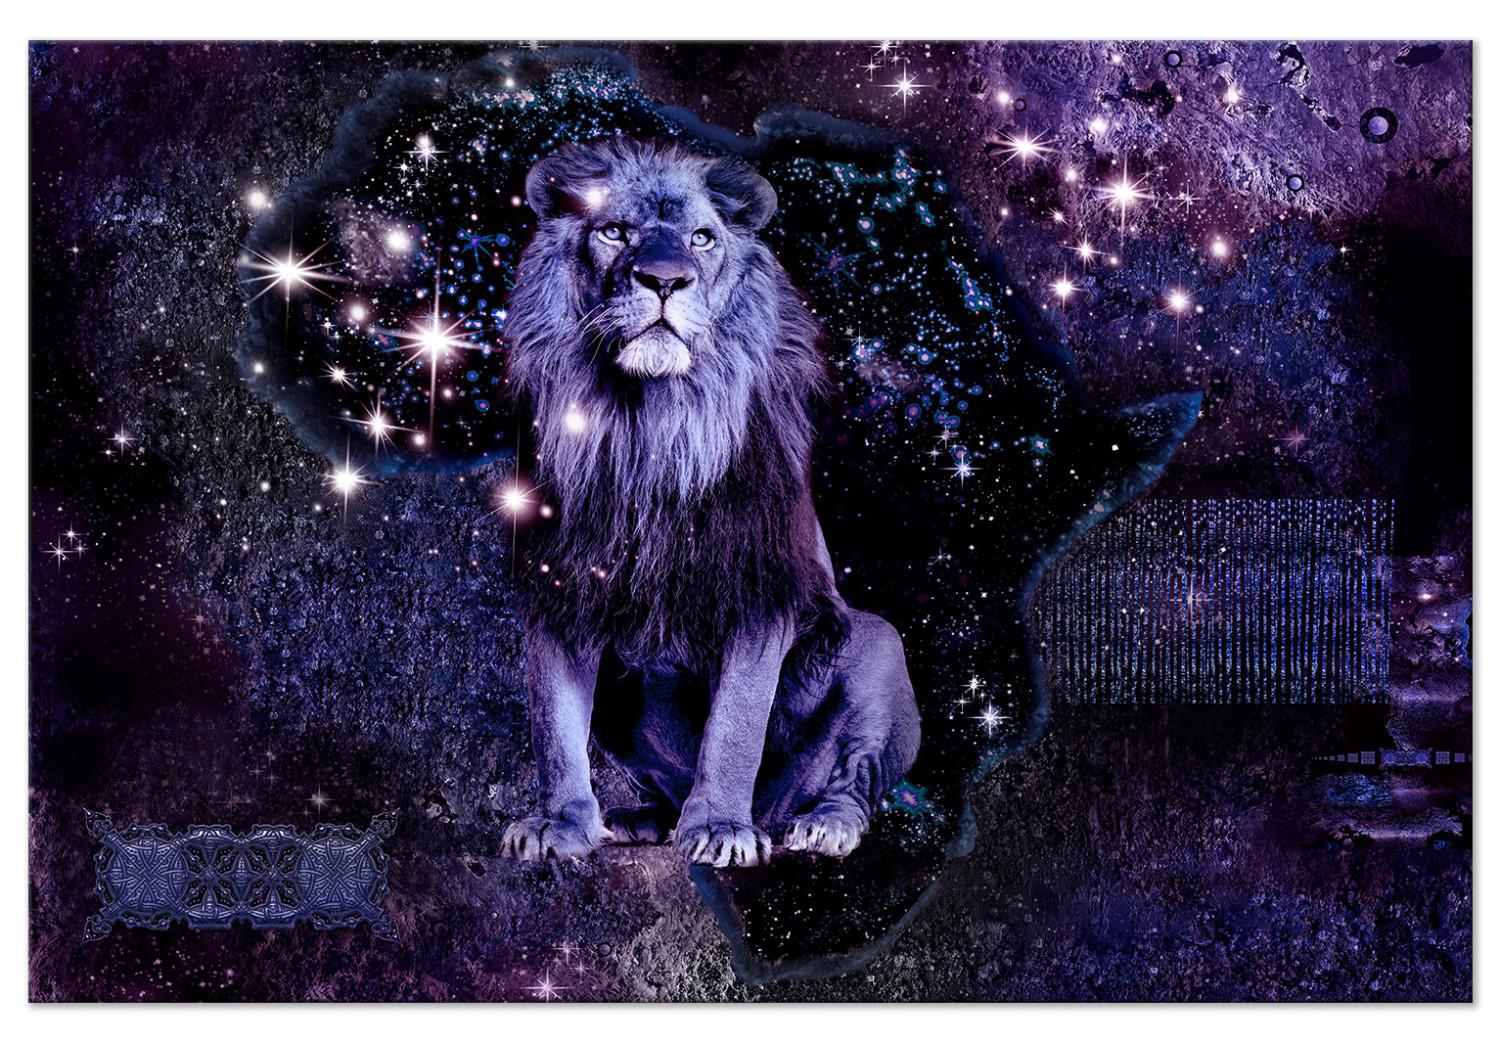 Canvas King's Rest (1-piece) wide - wild cat on purple background